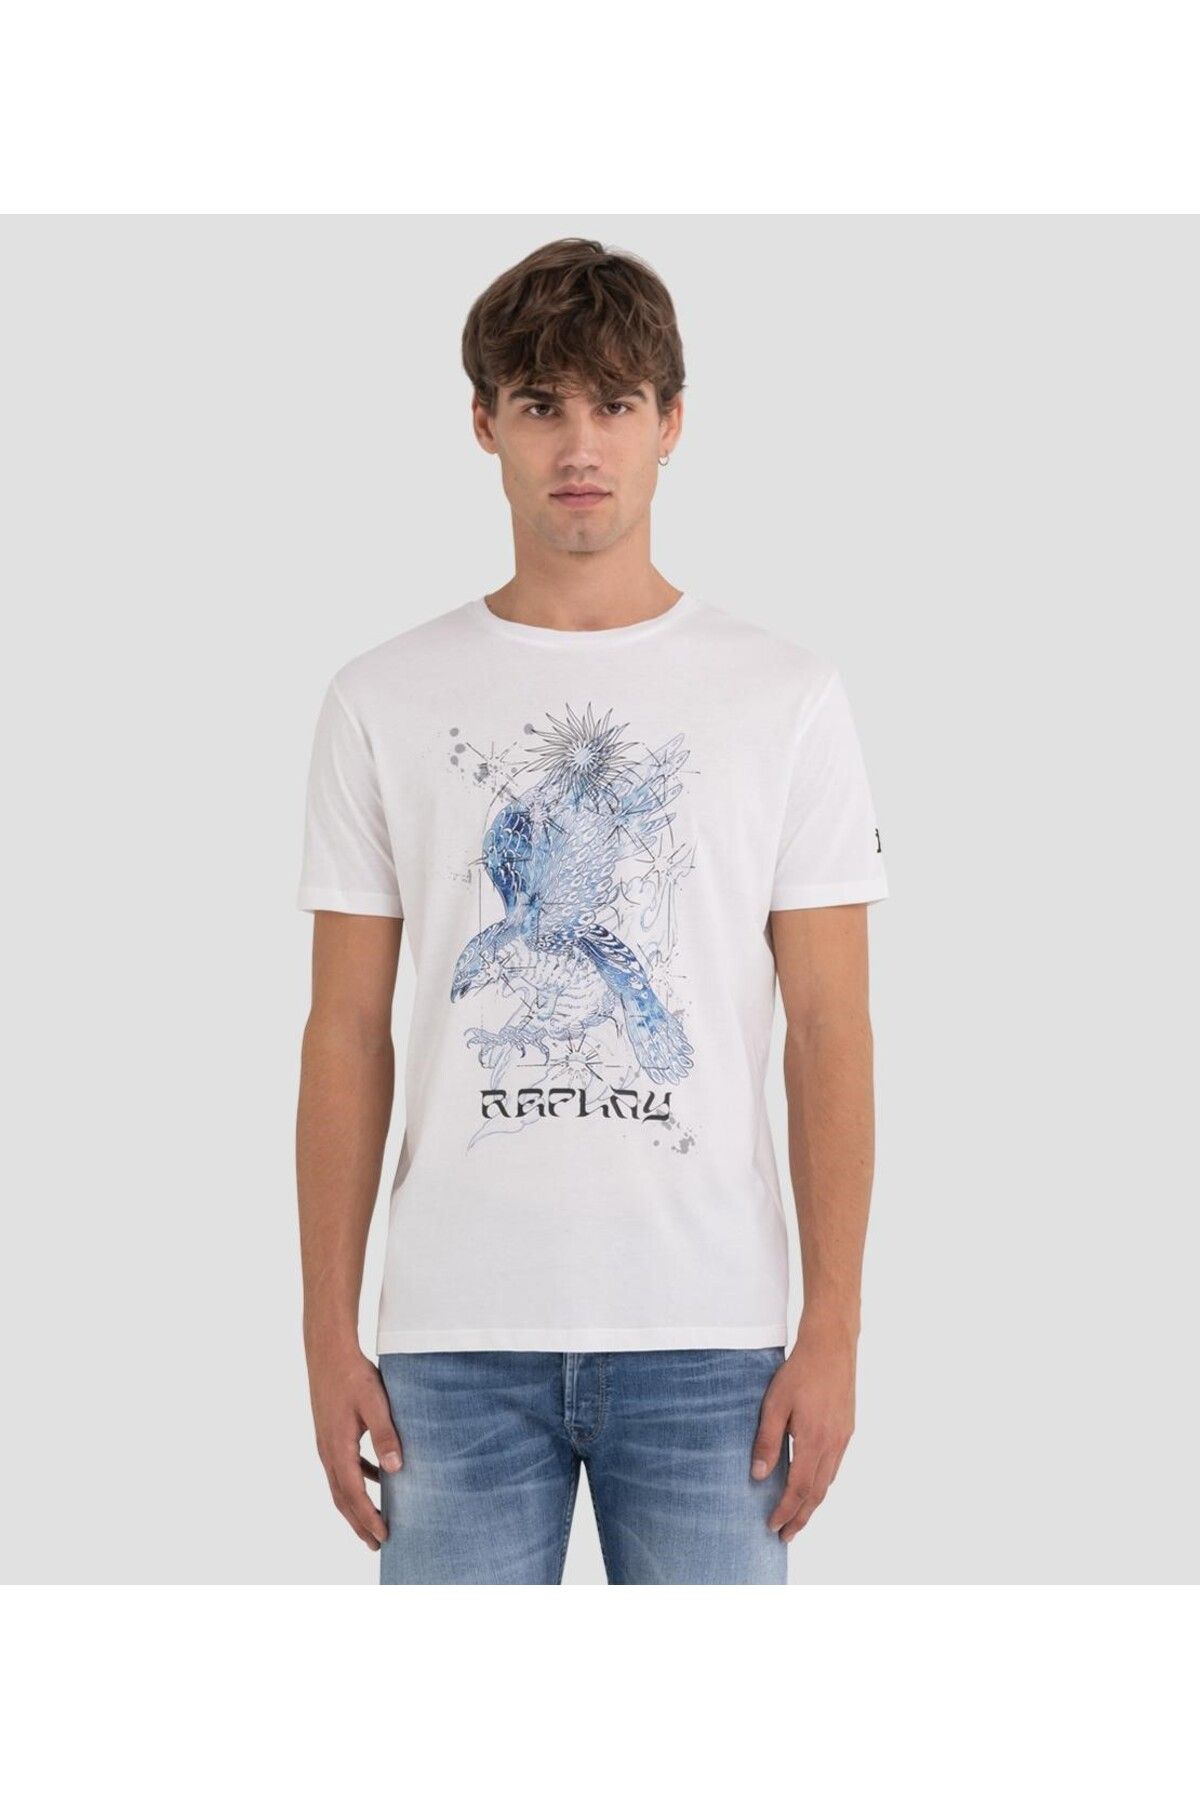 Replay Erkek Beyaz Baskılı Organik Pamuklu T-shirt